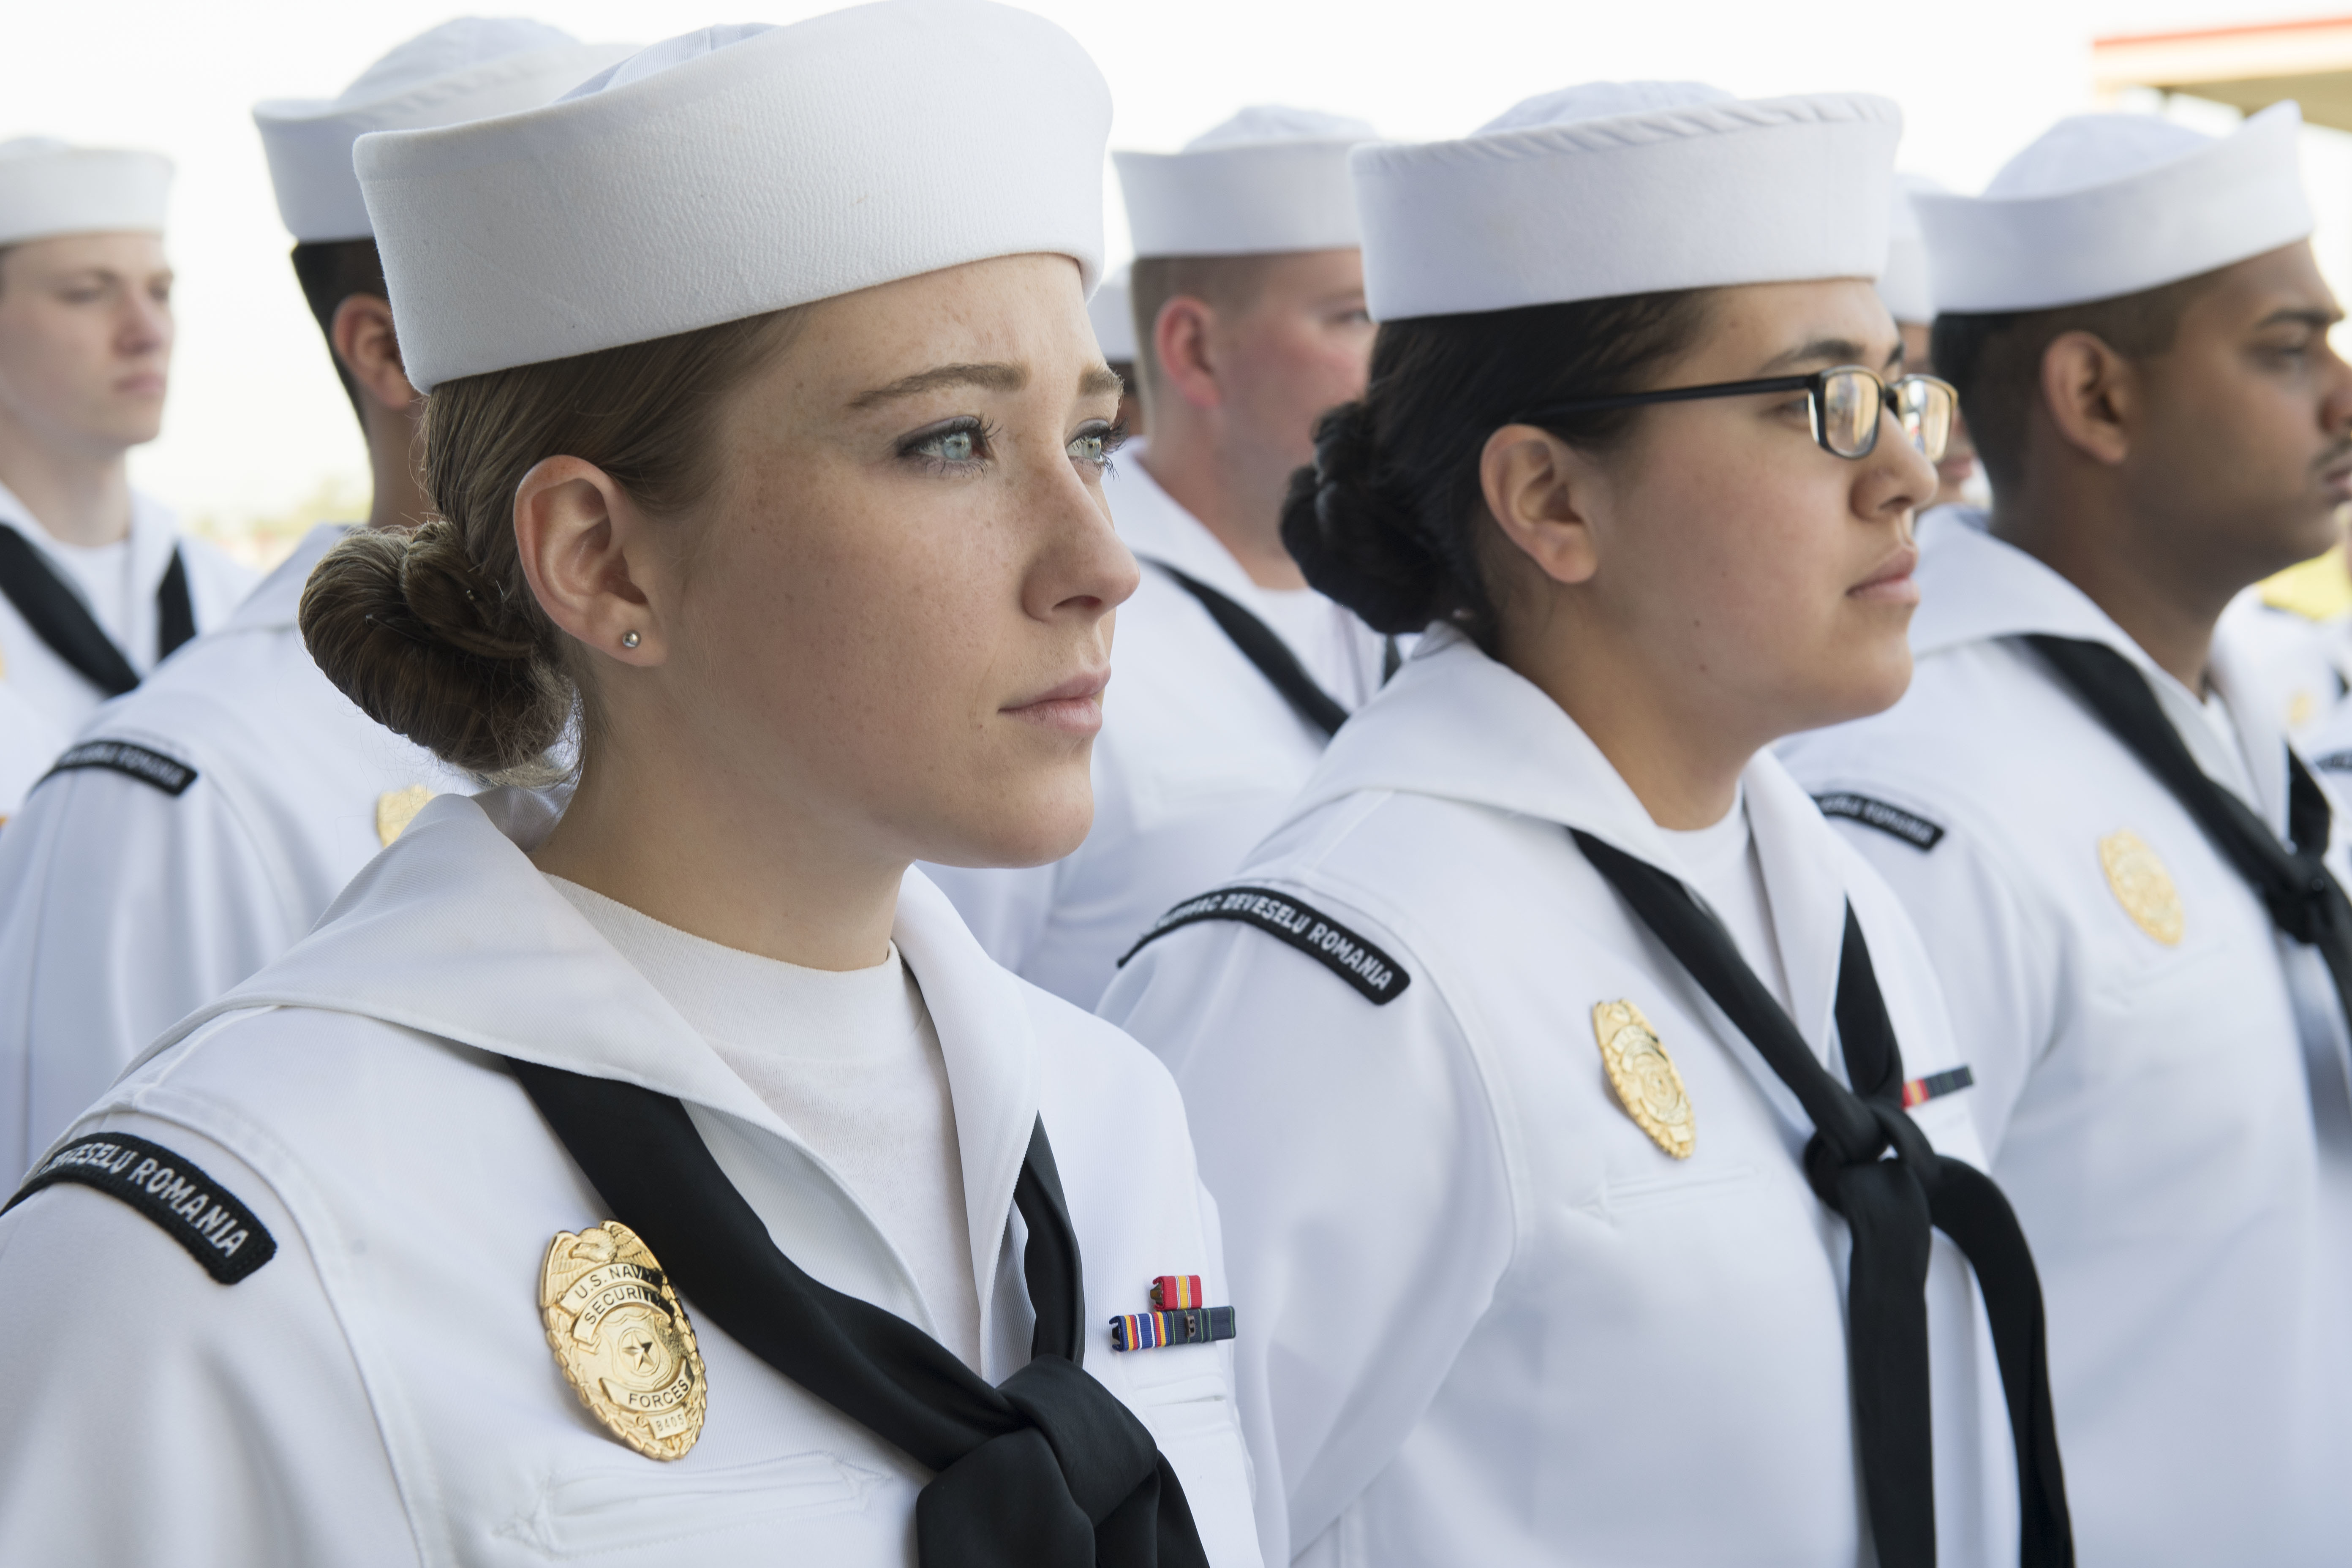 File:180501-N-BK435-0020 - U.S. Navy sailors standing during uniform  inspection.jpg - Wikimedia Commons